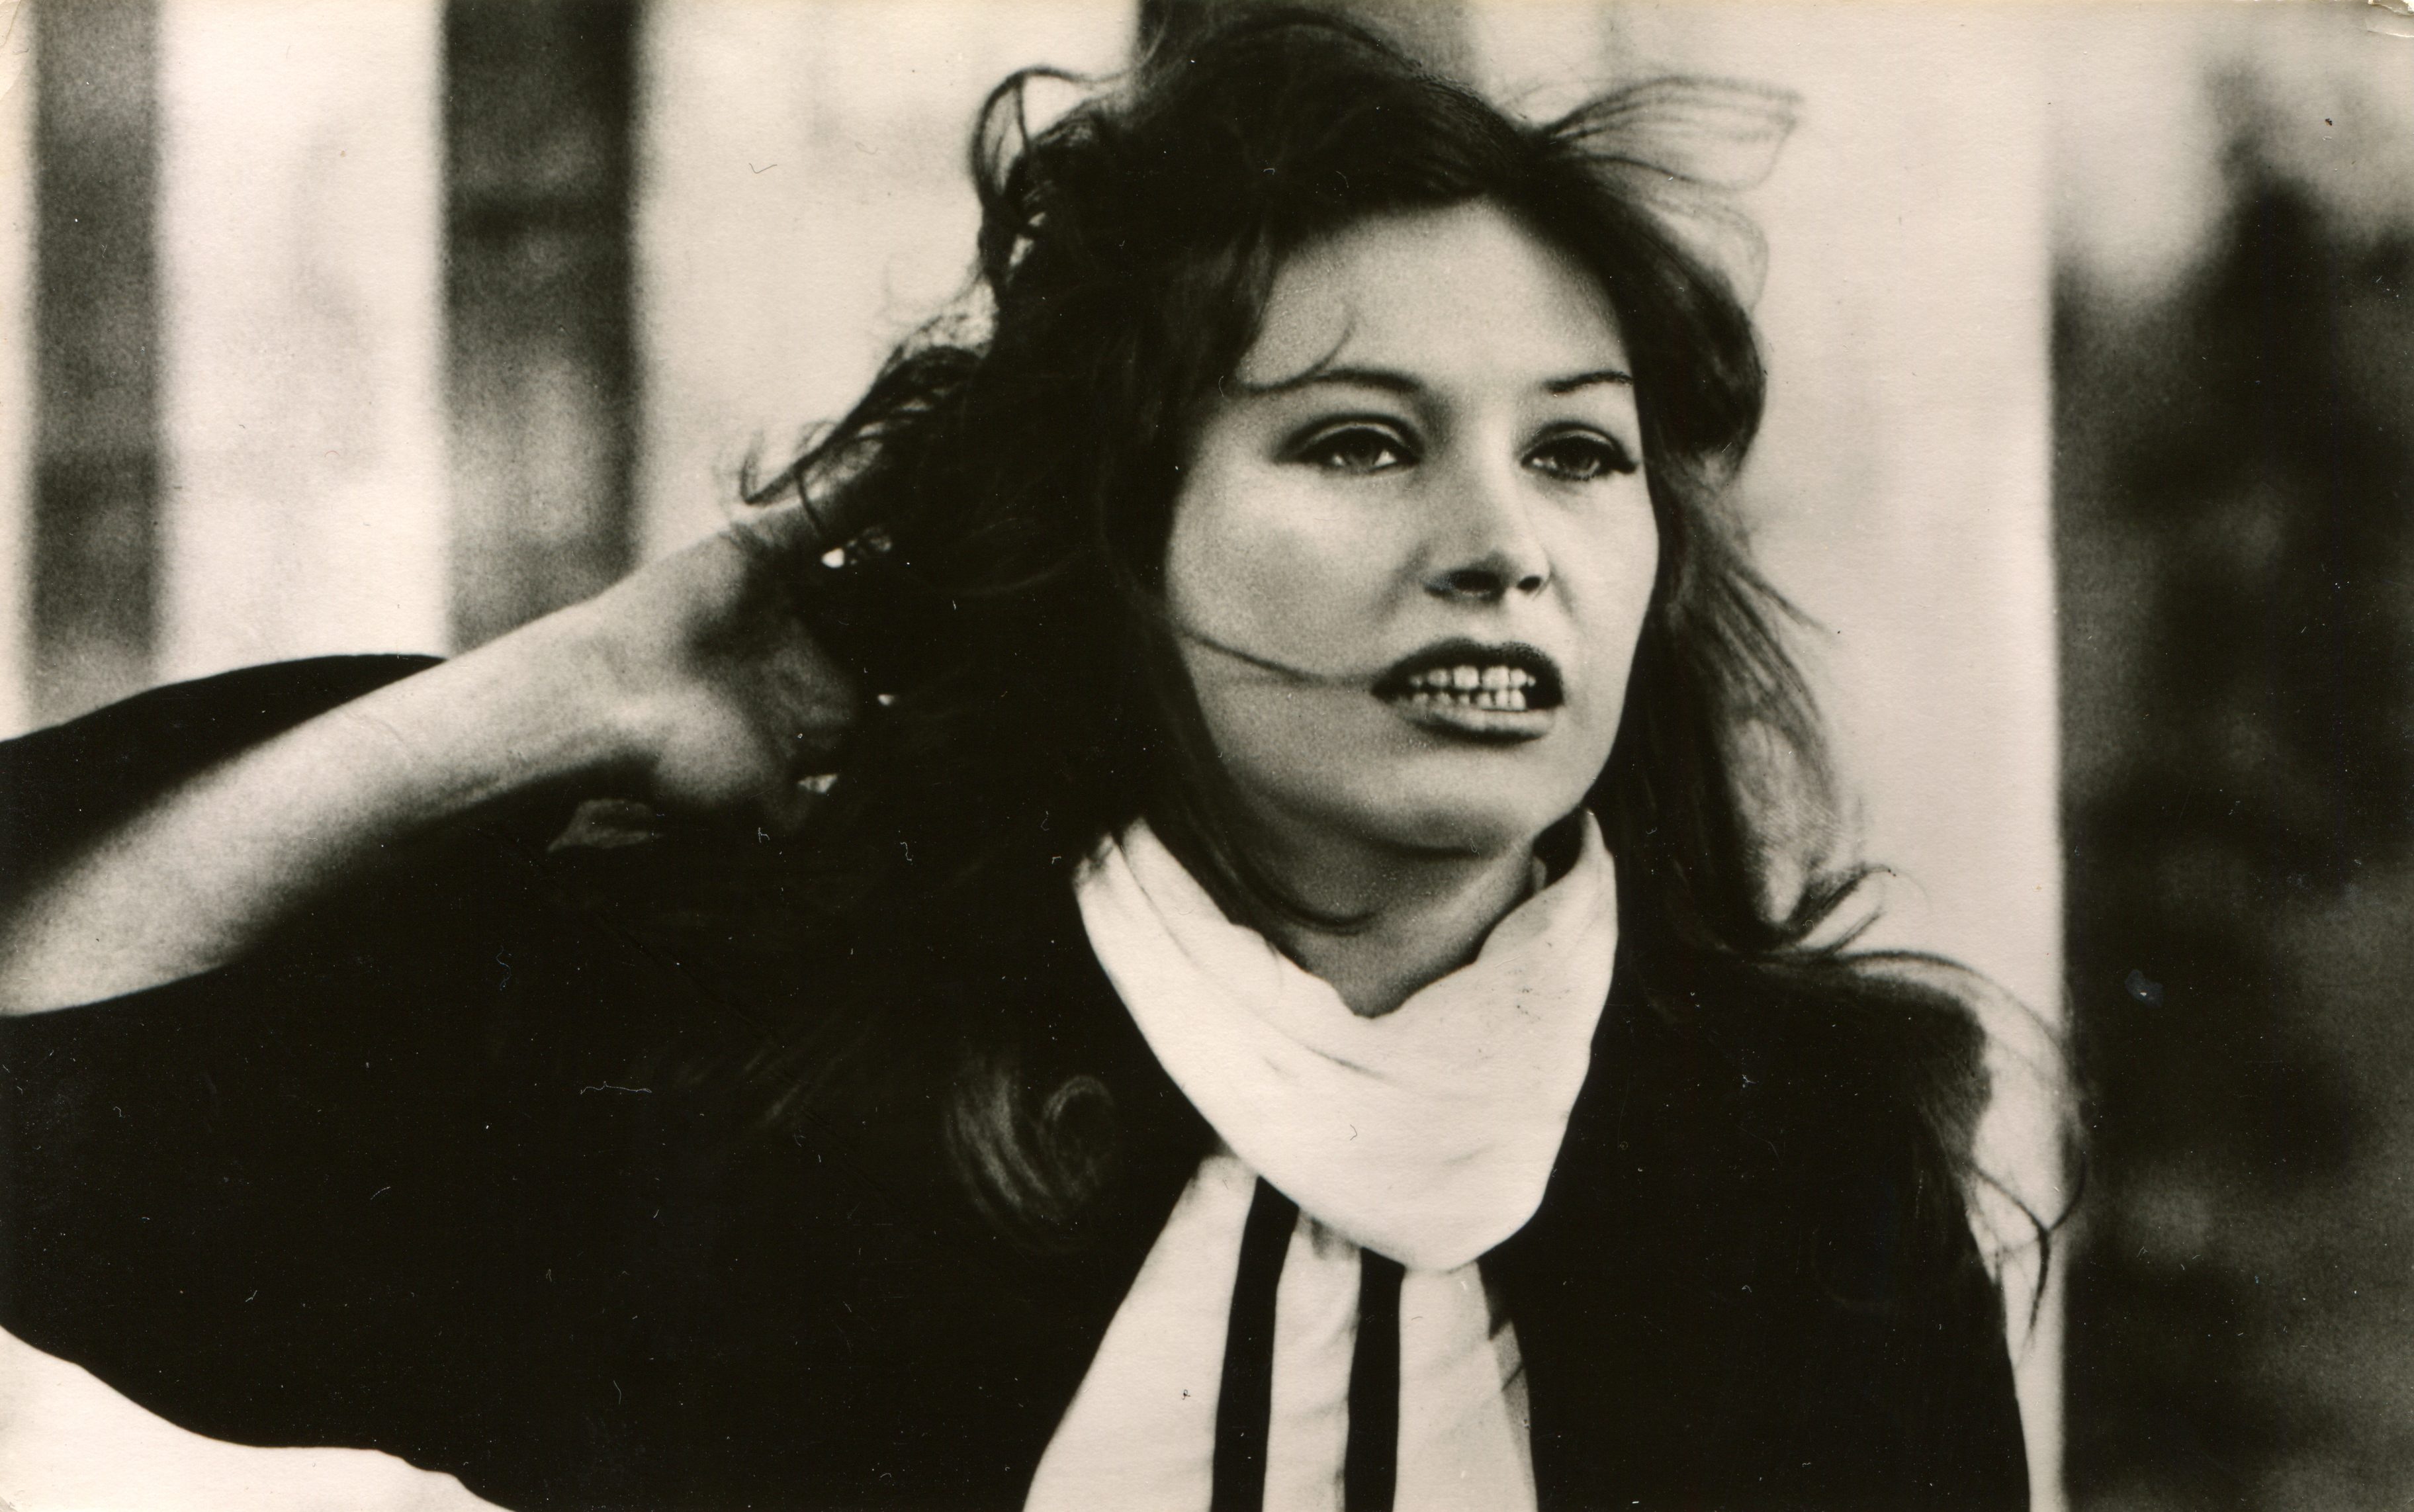 postcard shows Alla Pugacheva in movie Zhenshchina 1984